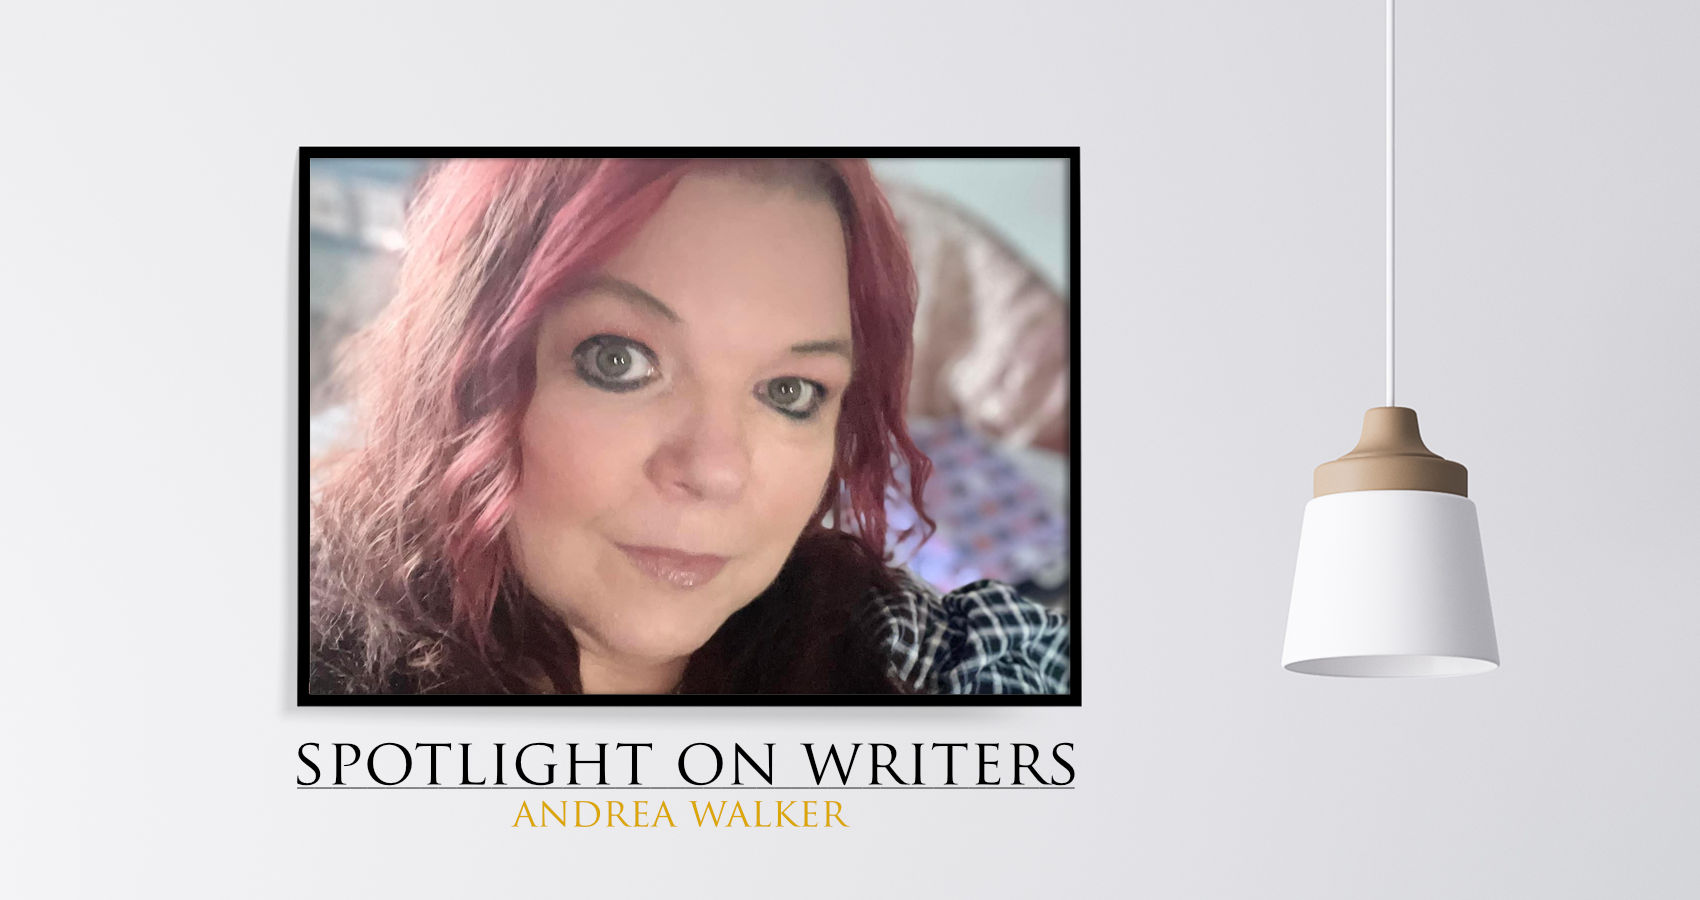 Spotlight On Writers - Andrea Walker, interview at Spillwords.com